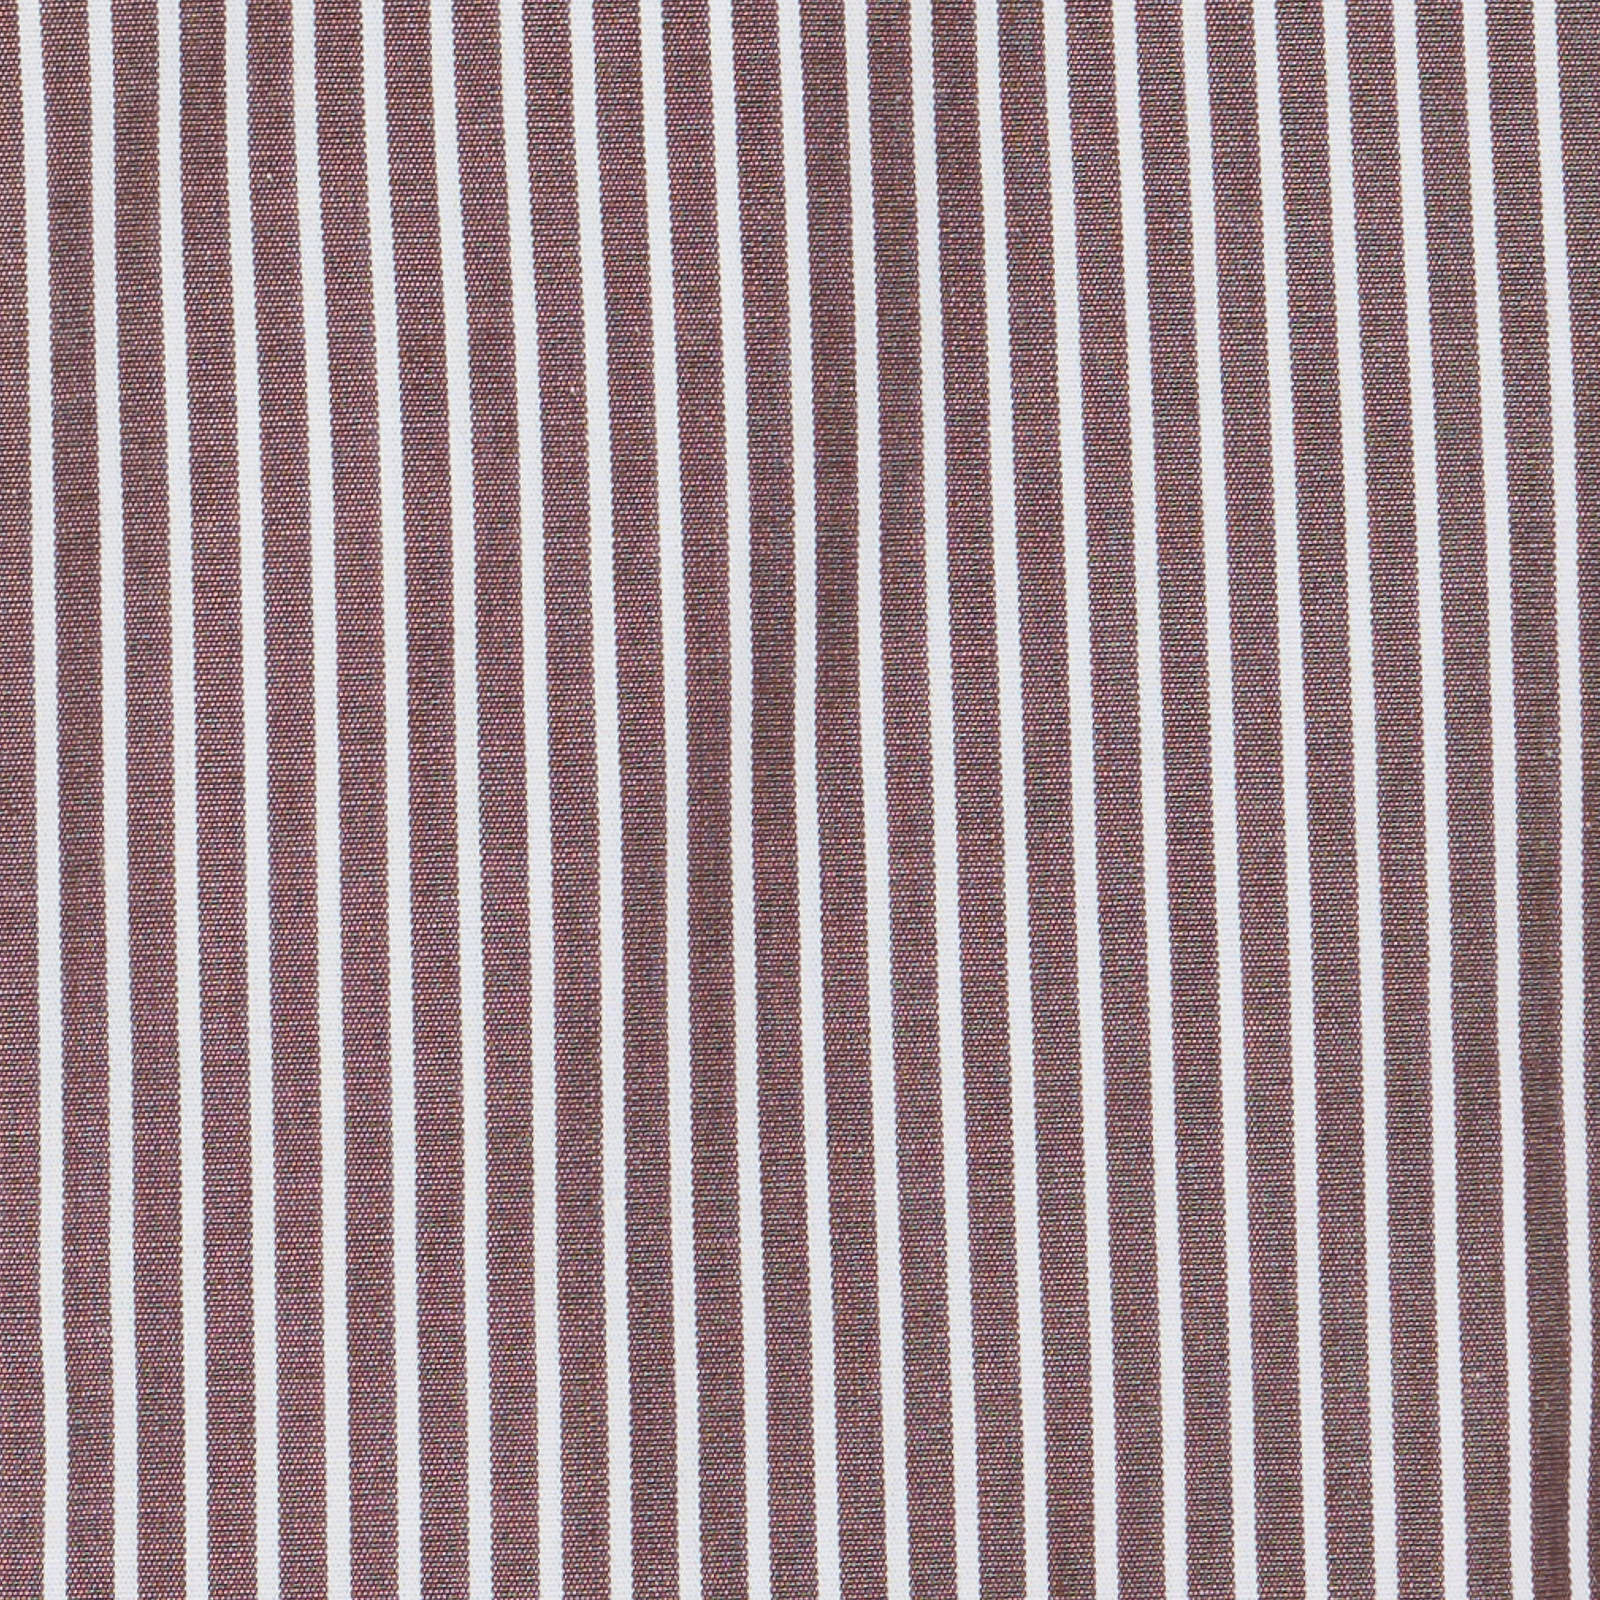 VANNUCCI Milano Brown Striped Broadcloth Cotton Dress Shirt EU 37 NEW US 14.5